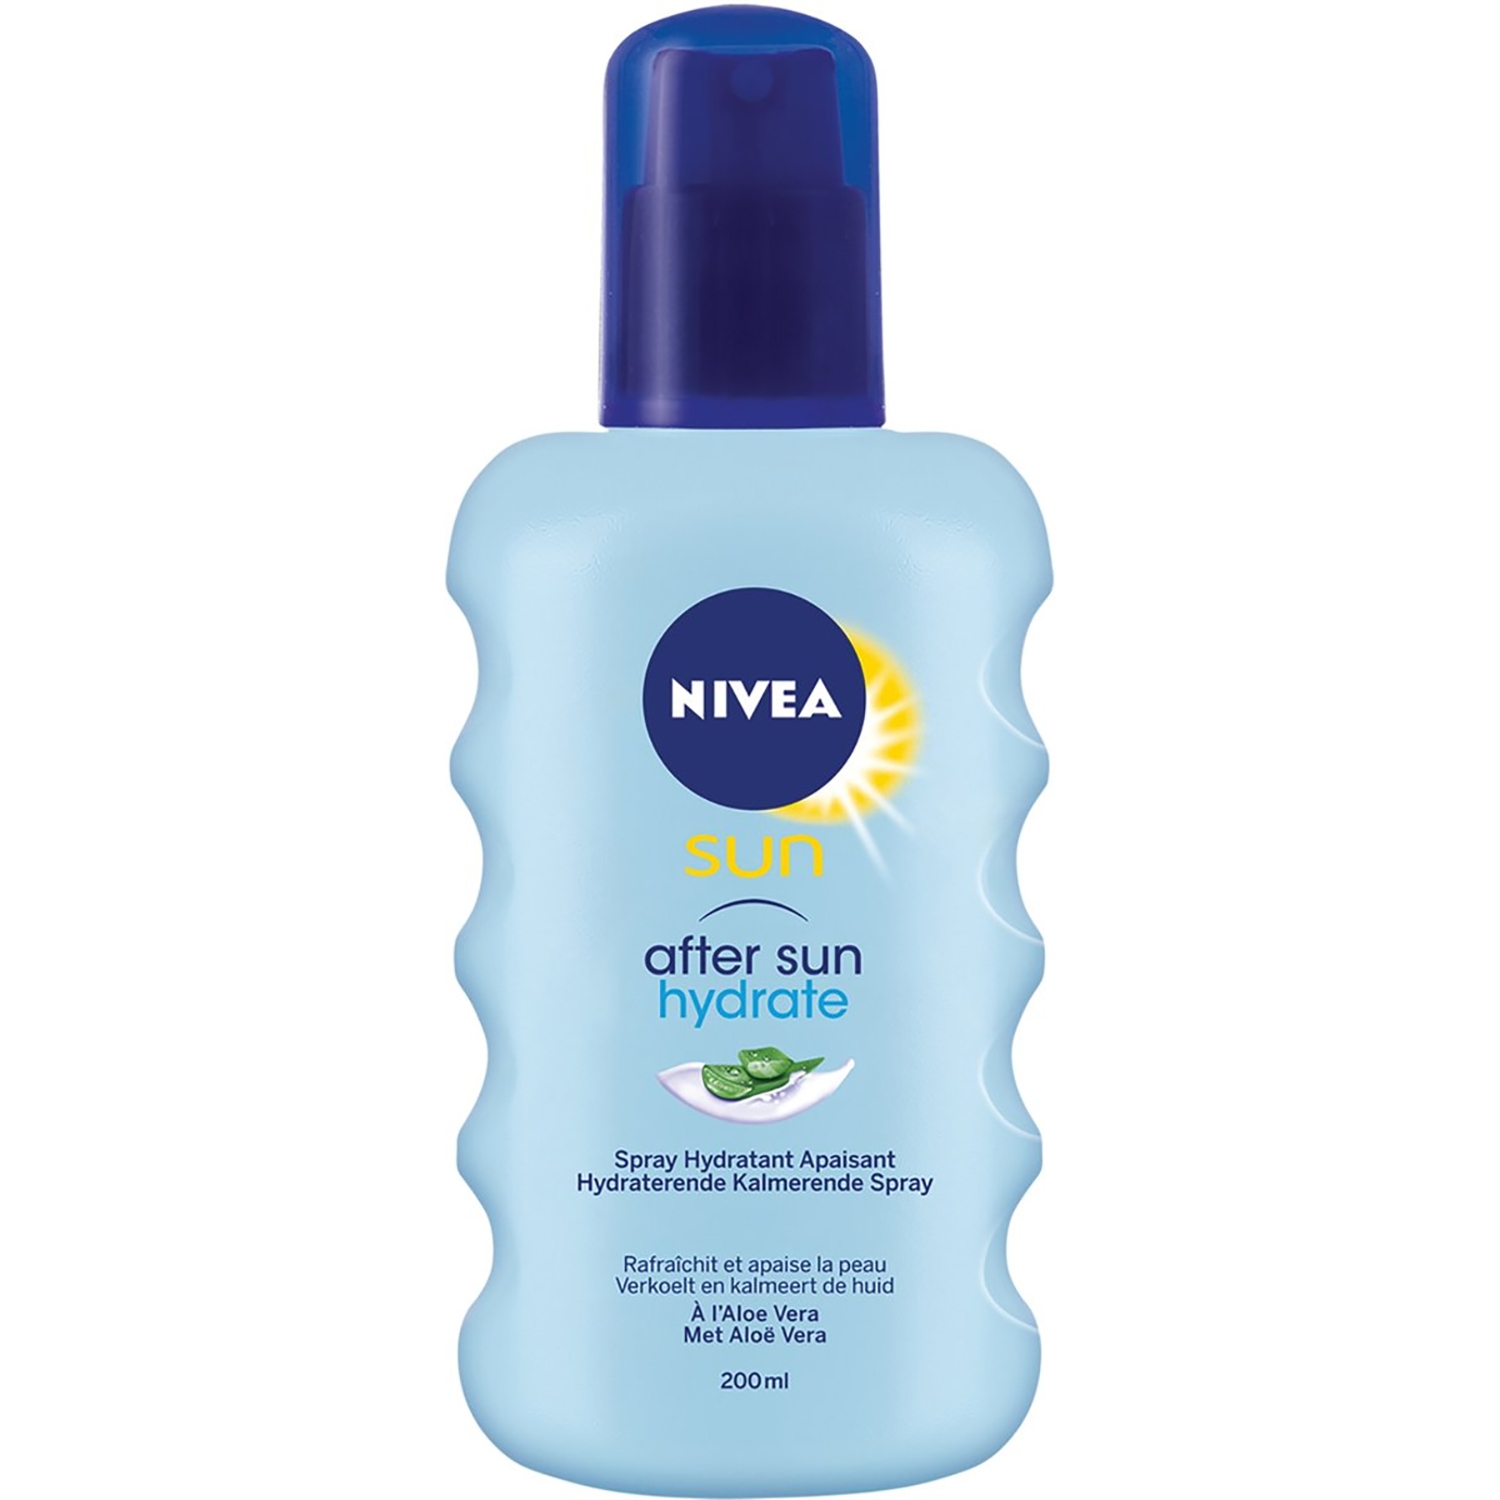 Nivea after sun spray hydrate - 200 ml (einde voorraad)